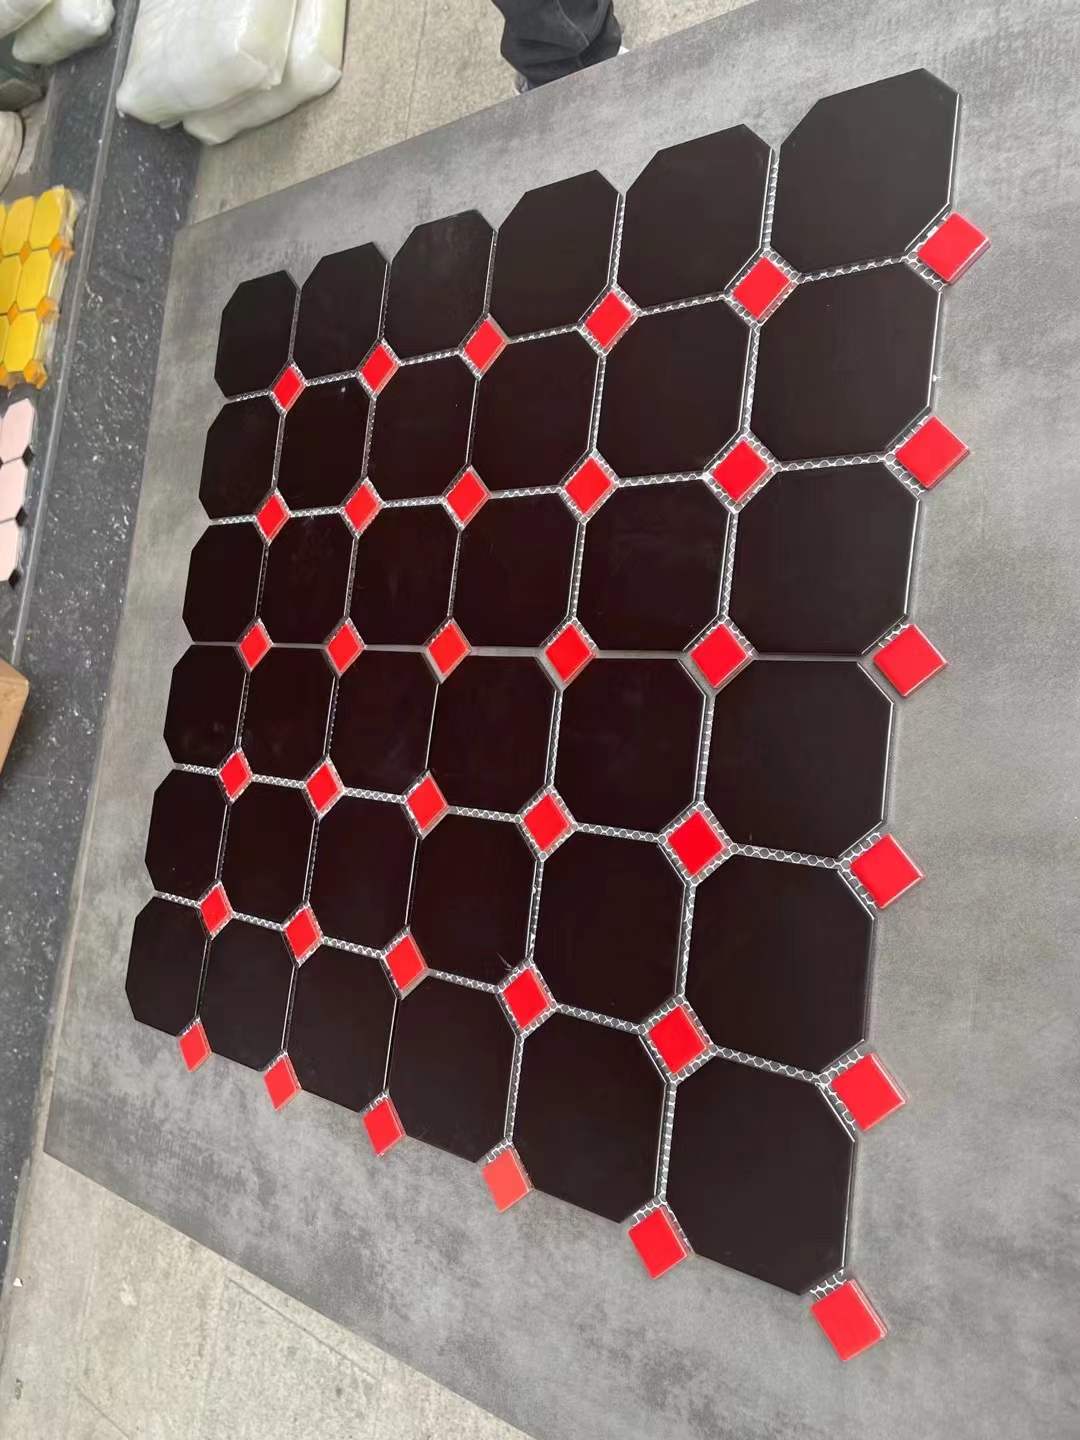 Pink Hexagon Mosaic Tile